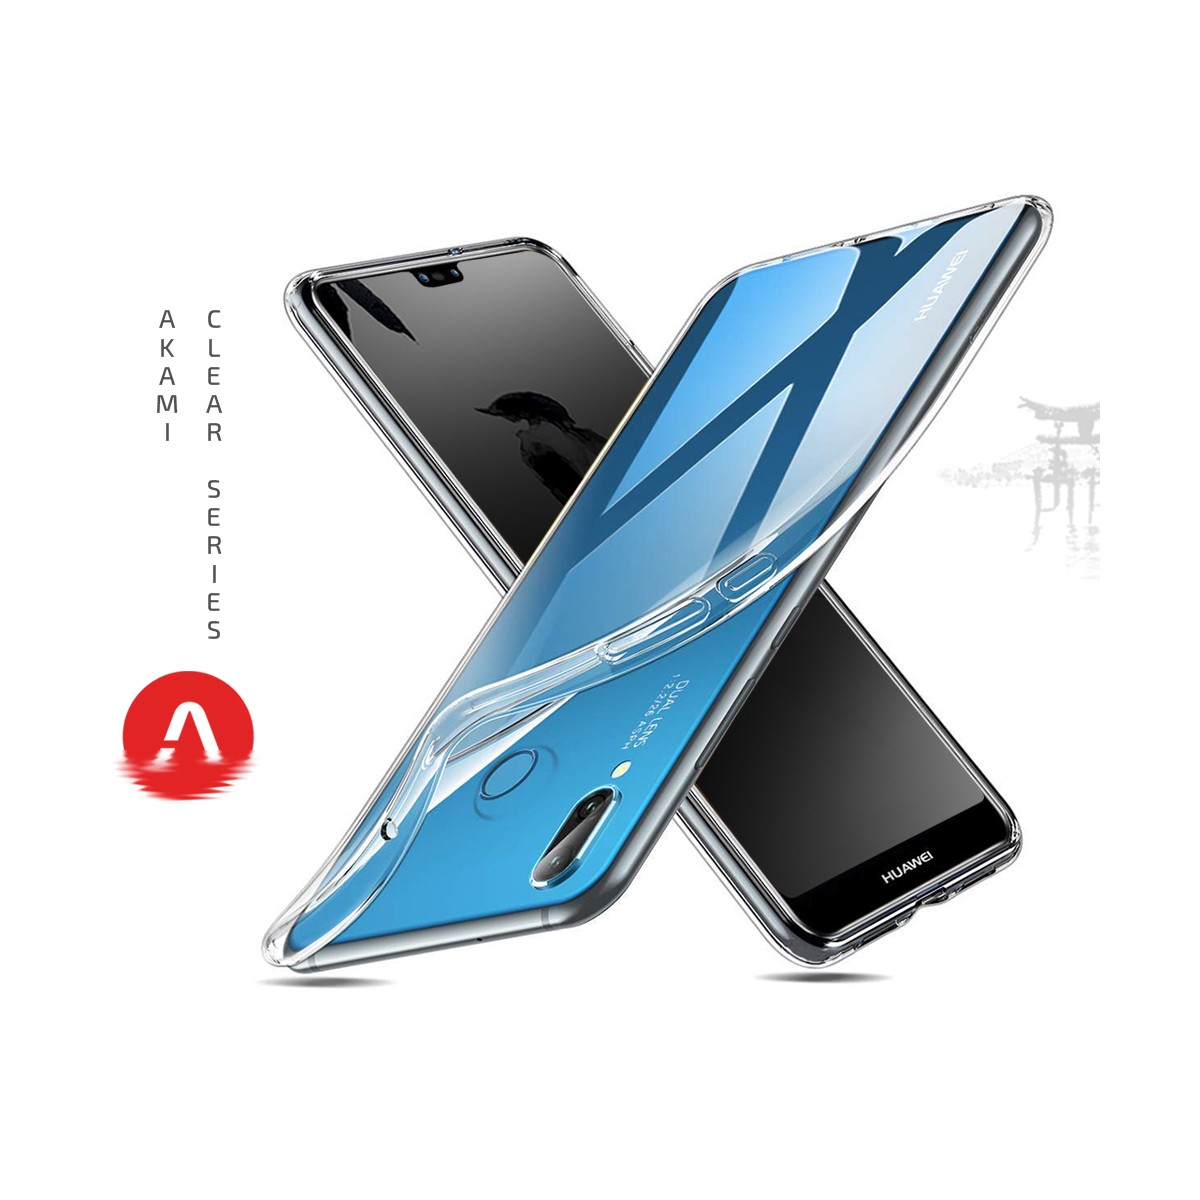 Akami coque transparente pour Huawei P20 Lite en silicone de haute qualité